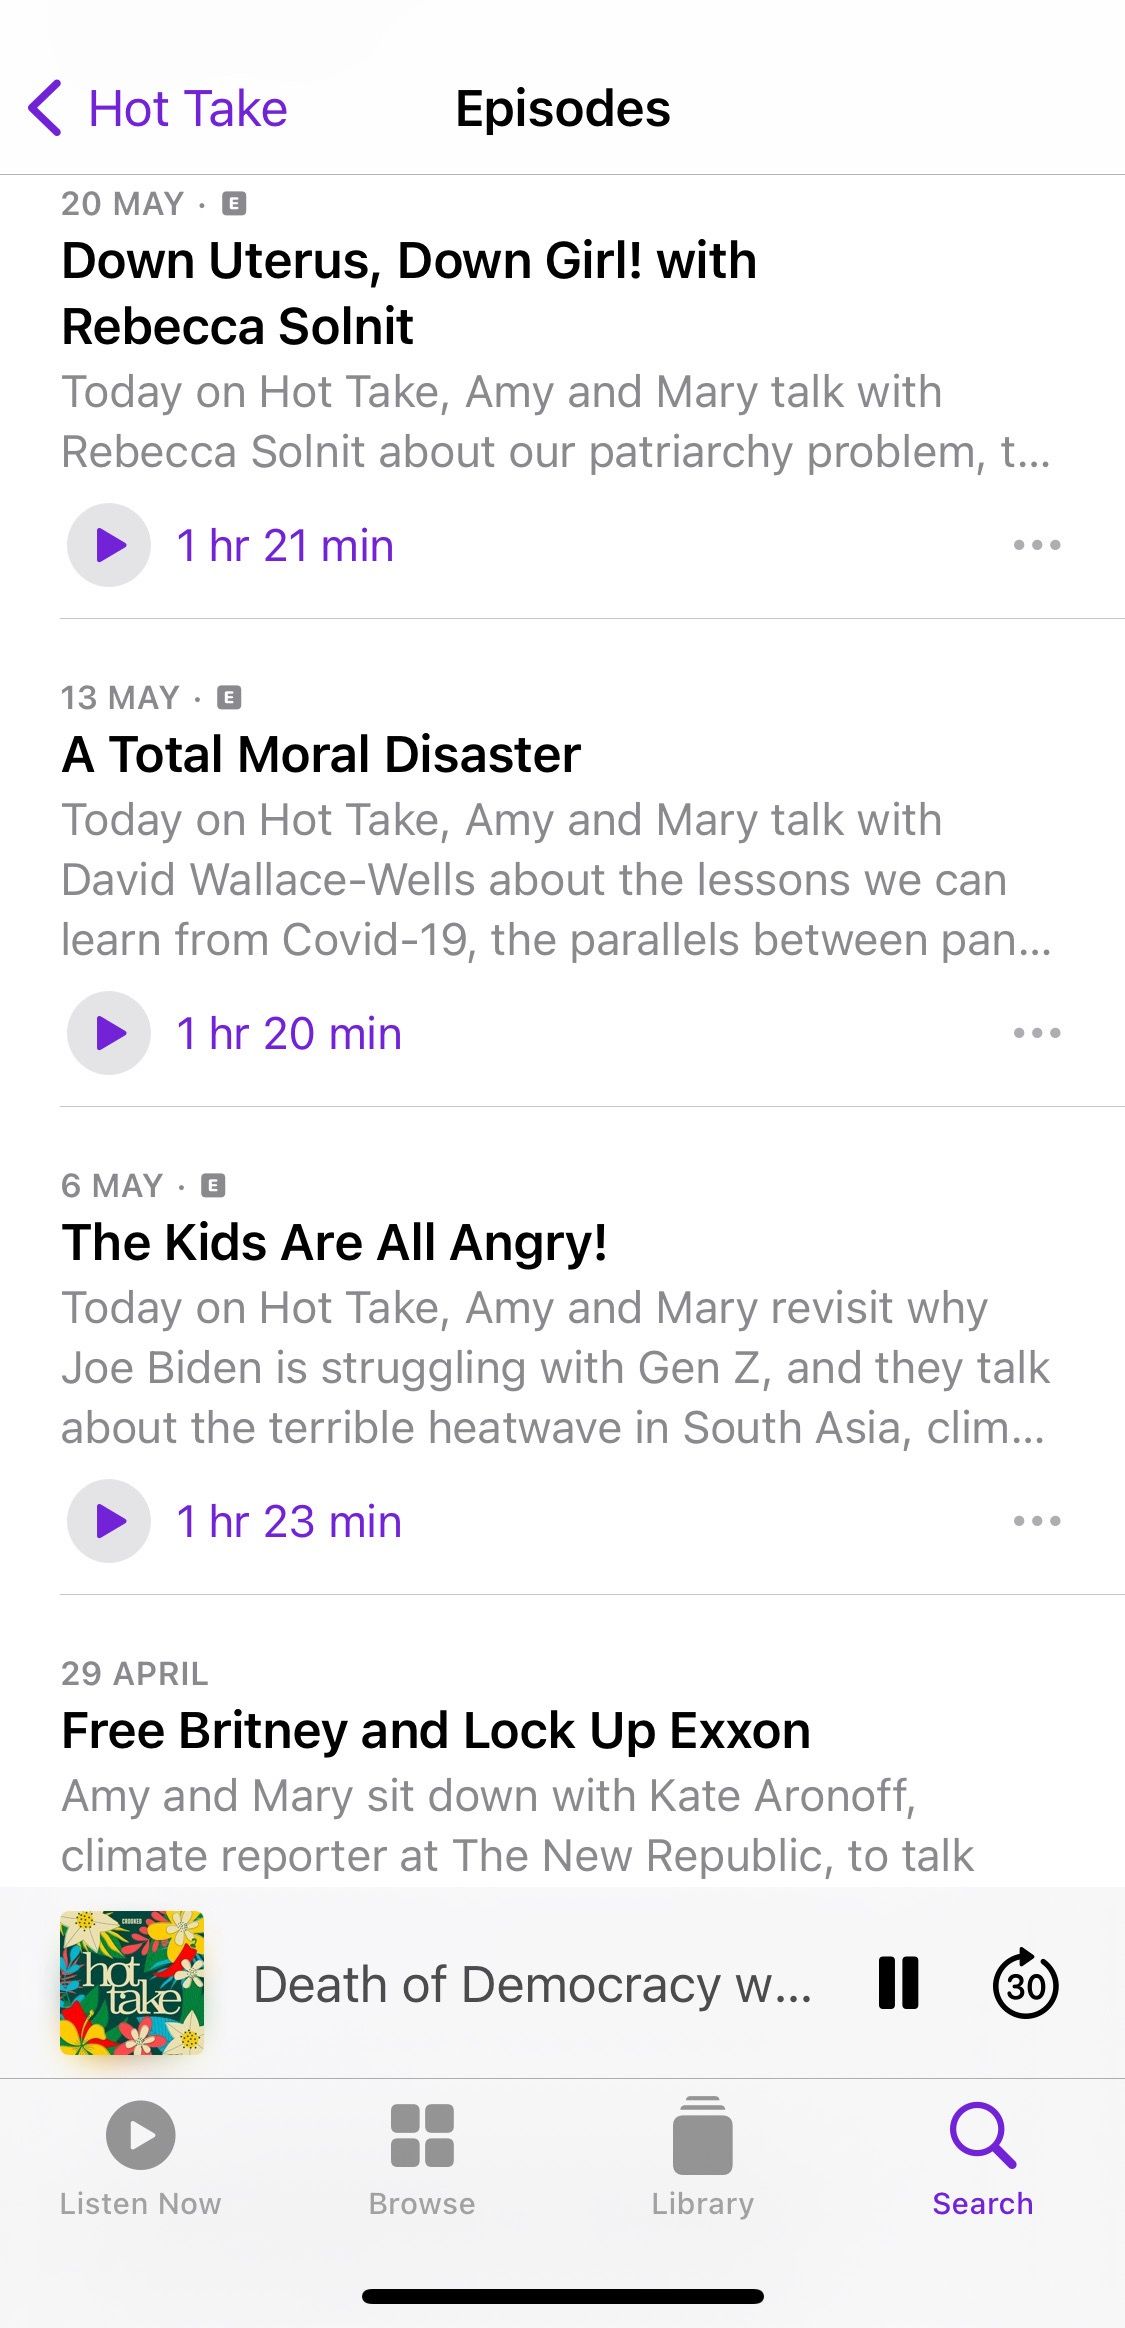 Screenshot showing Hot Take podcast sample episodes